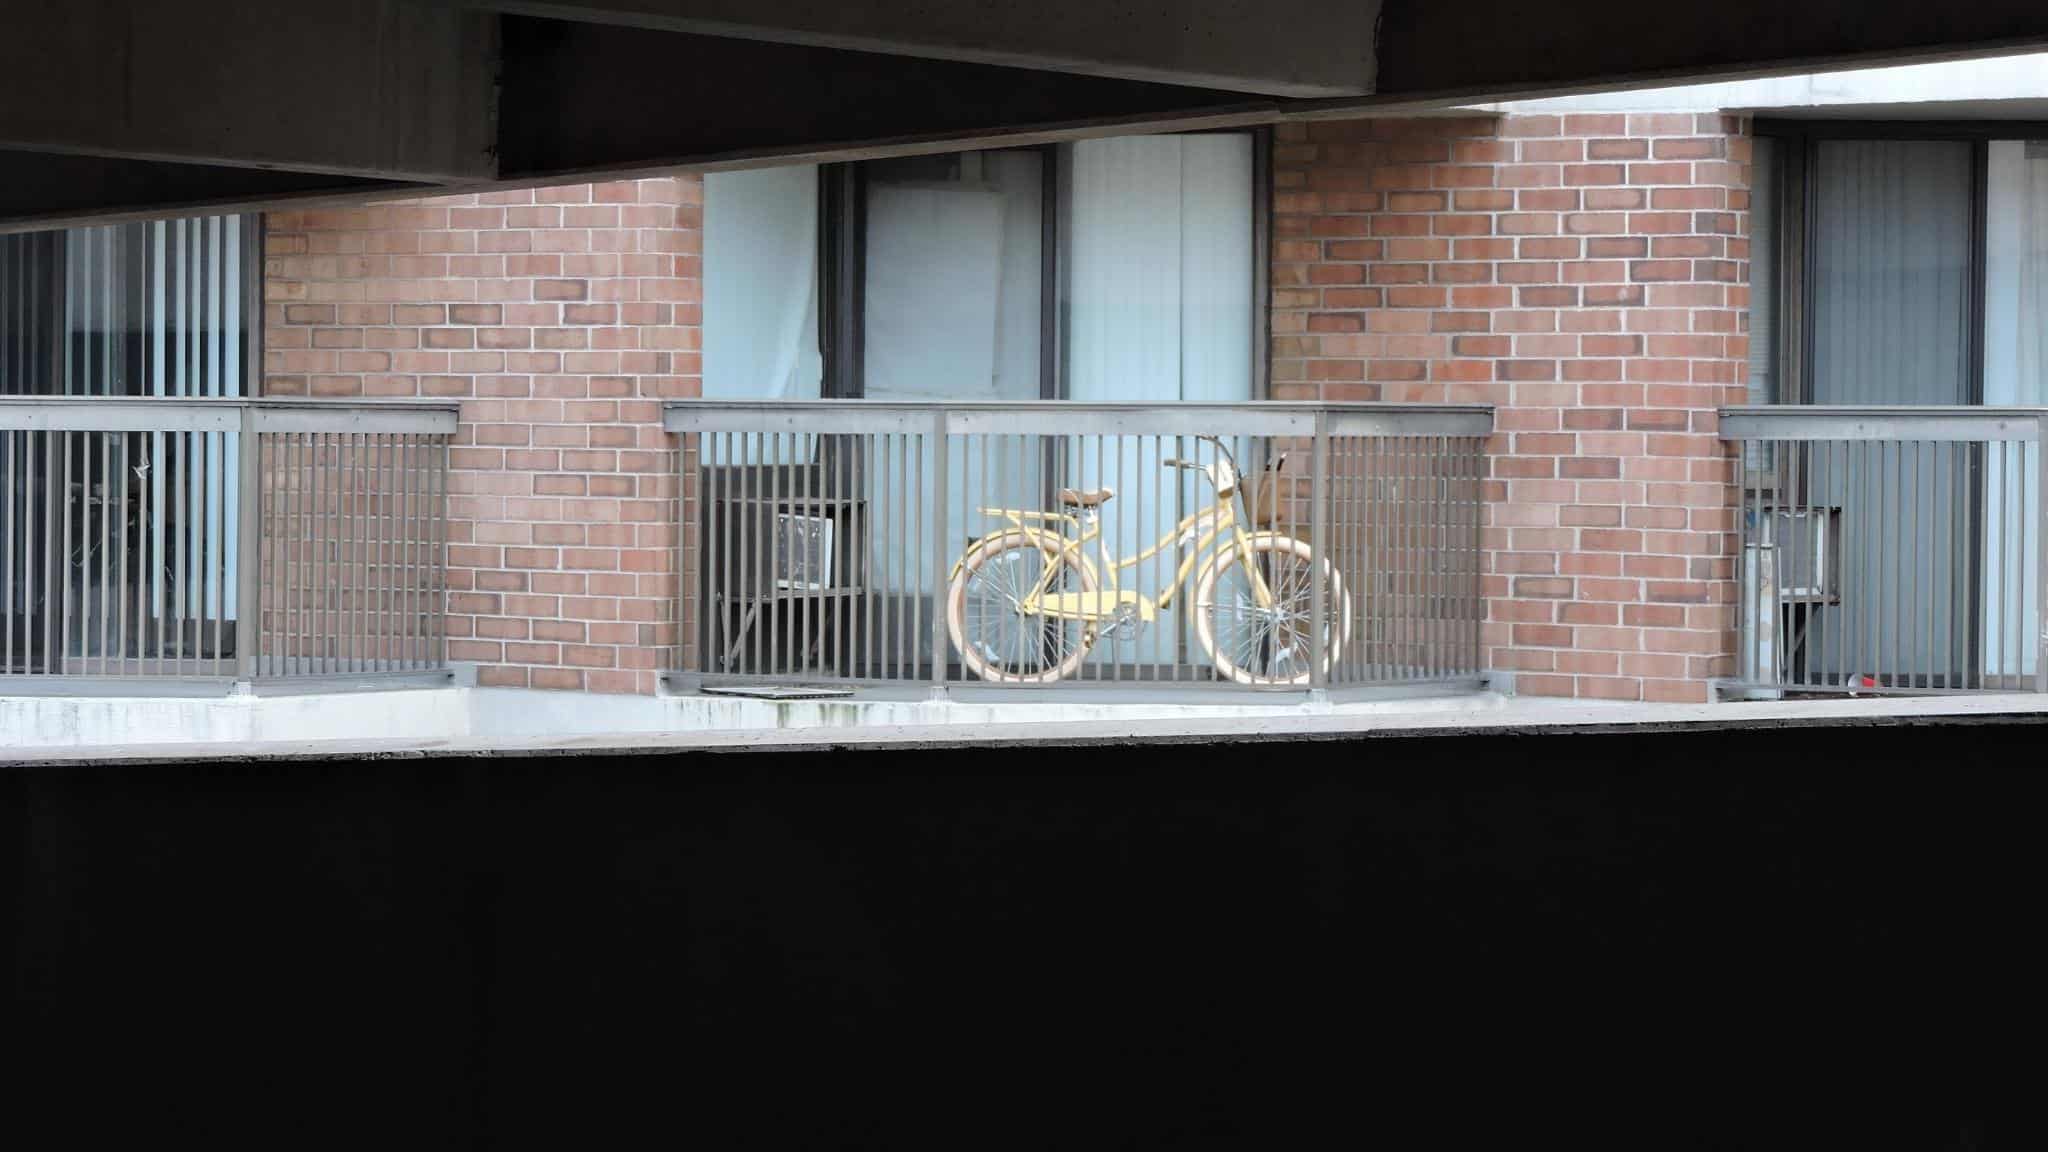 Bike stored on the balcony